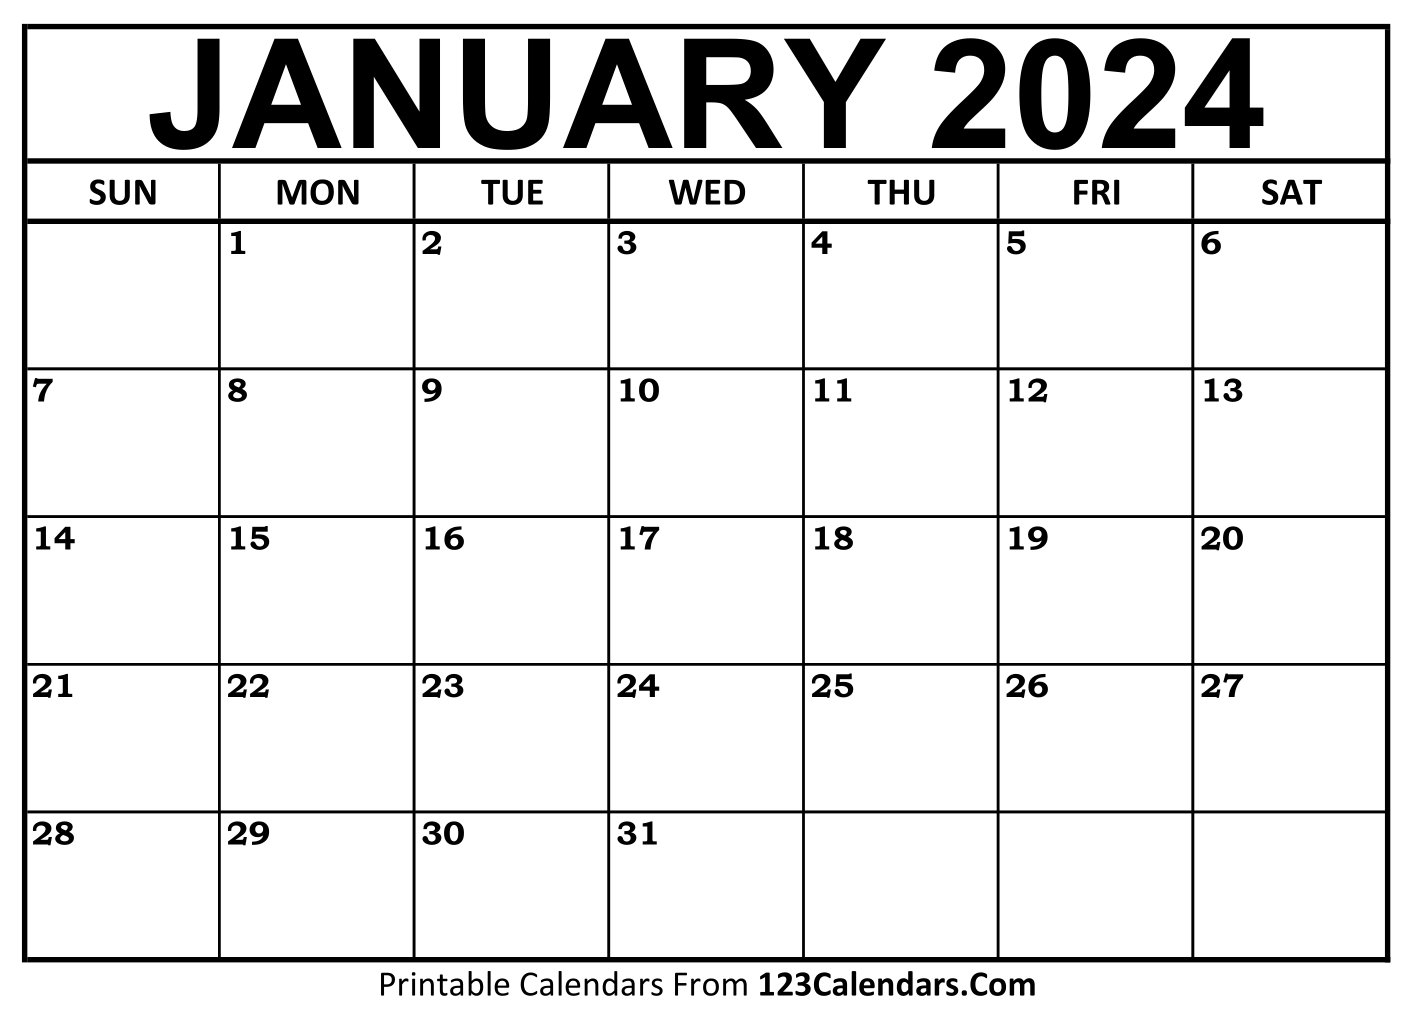 Printable January 2024 Calendar Templates - 123Calendars for Free Printable Monthly Calendar January 2024